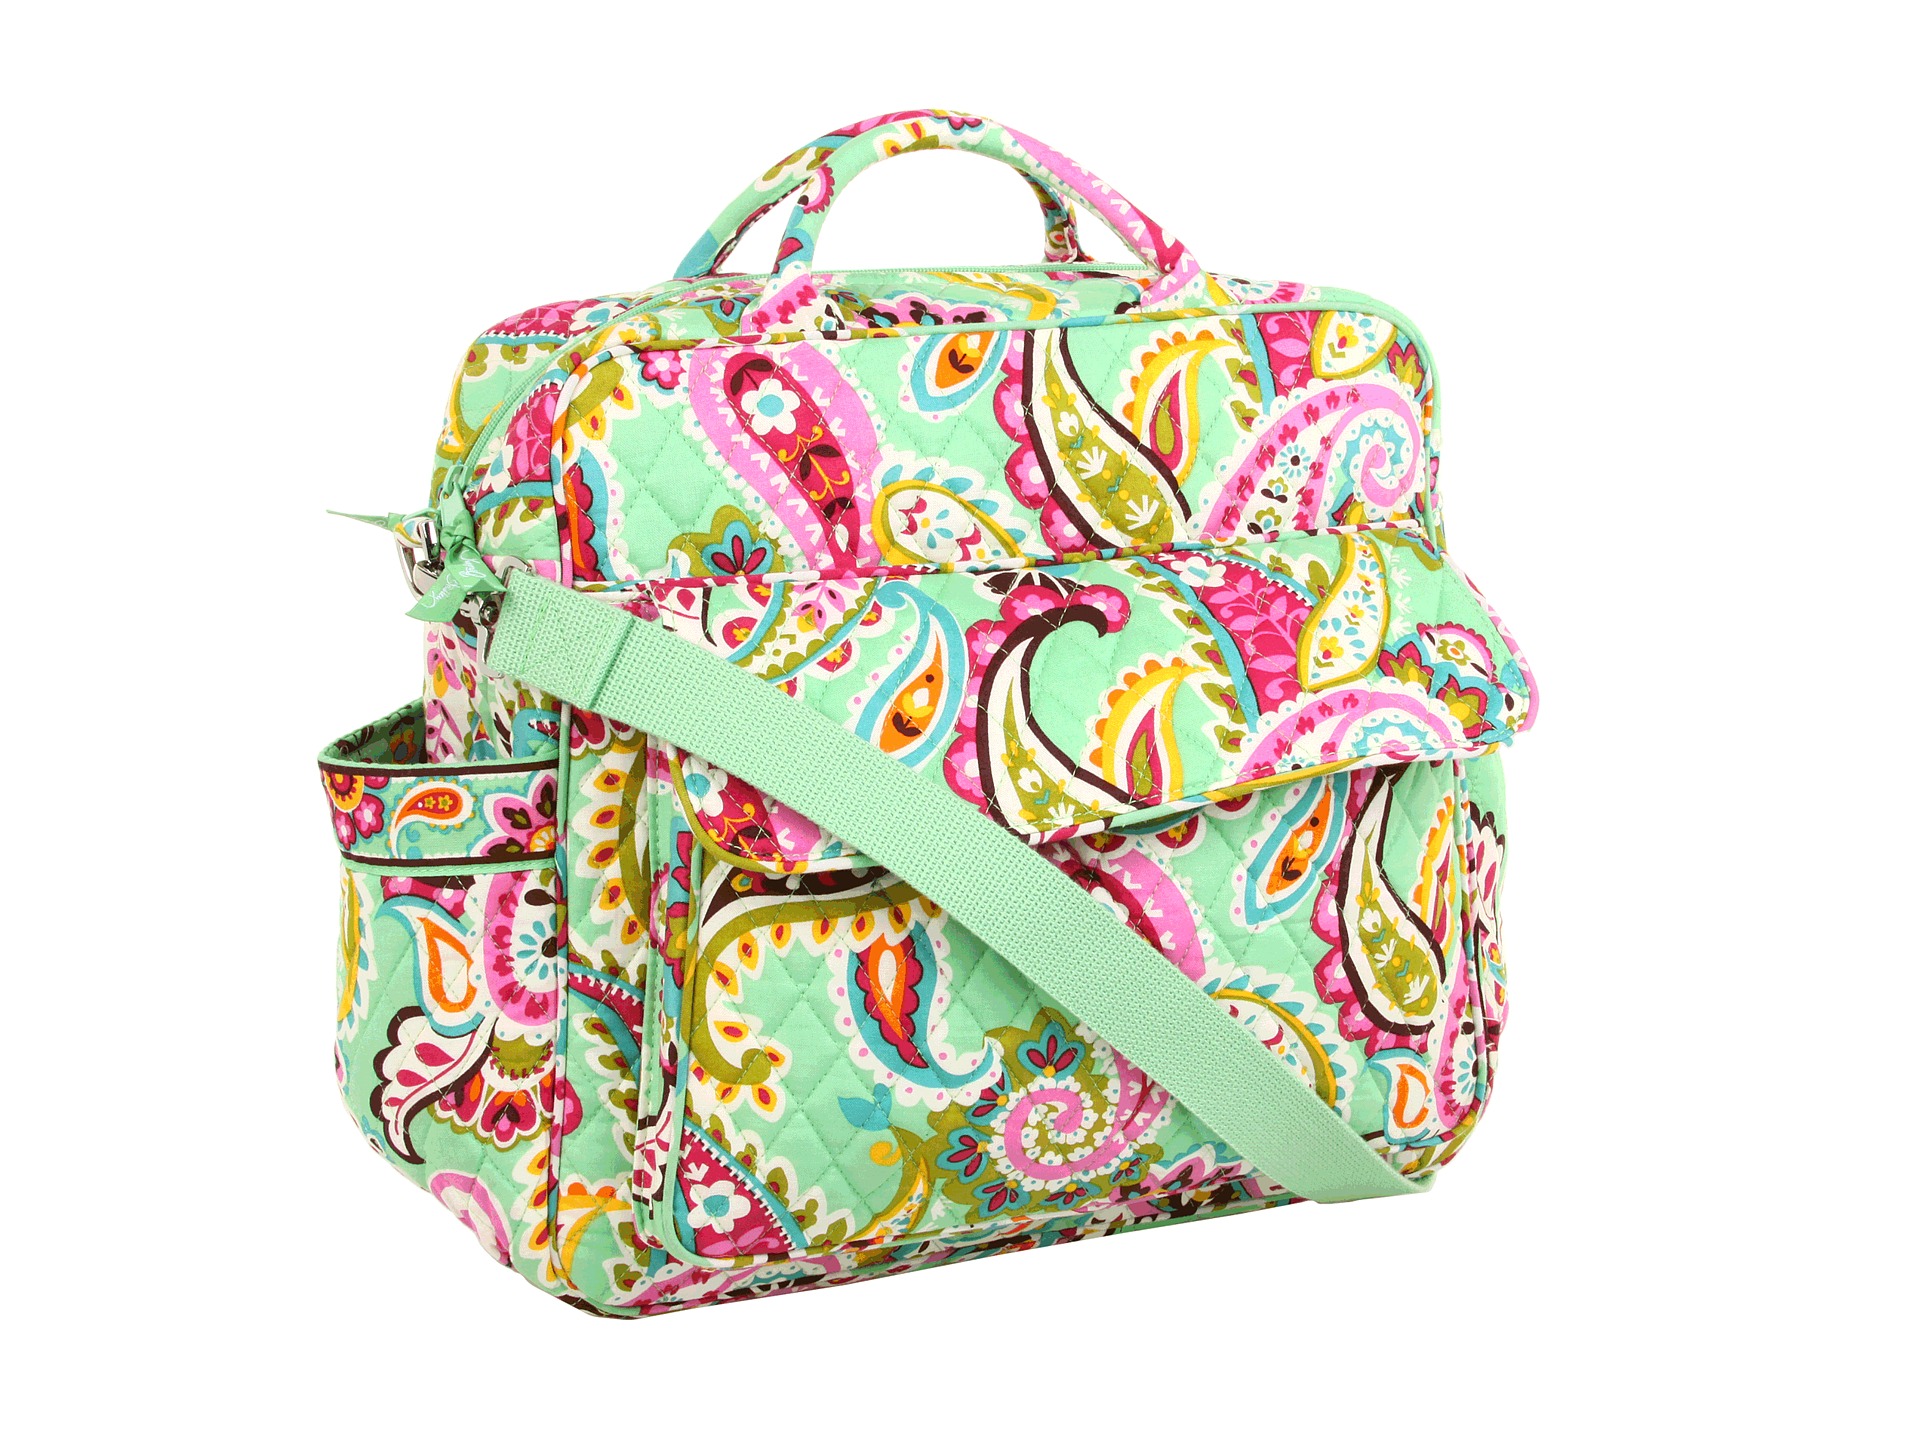 Vera Bradley Convertible Baby Bag Tutti Frutti | Shipped Free at Zappos